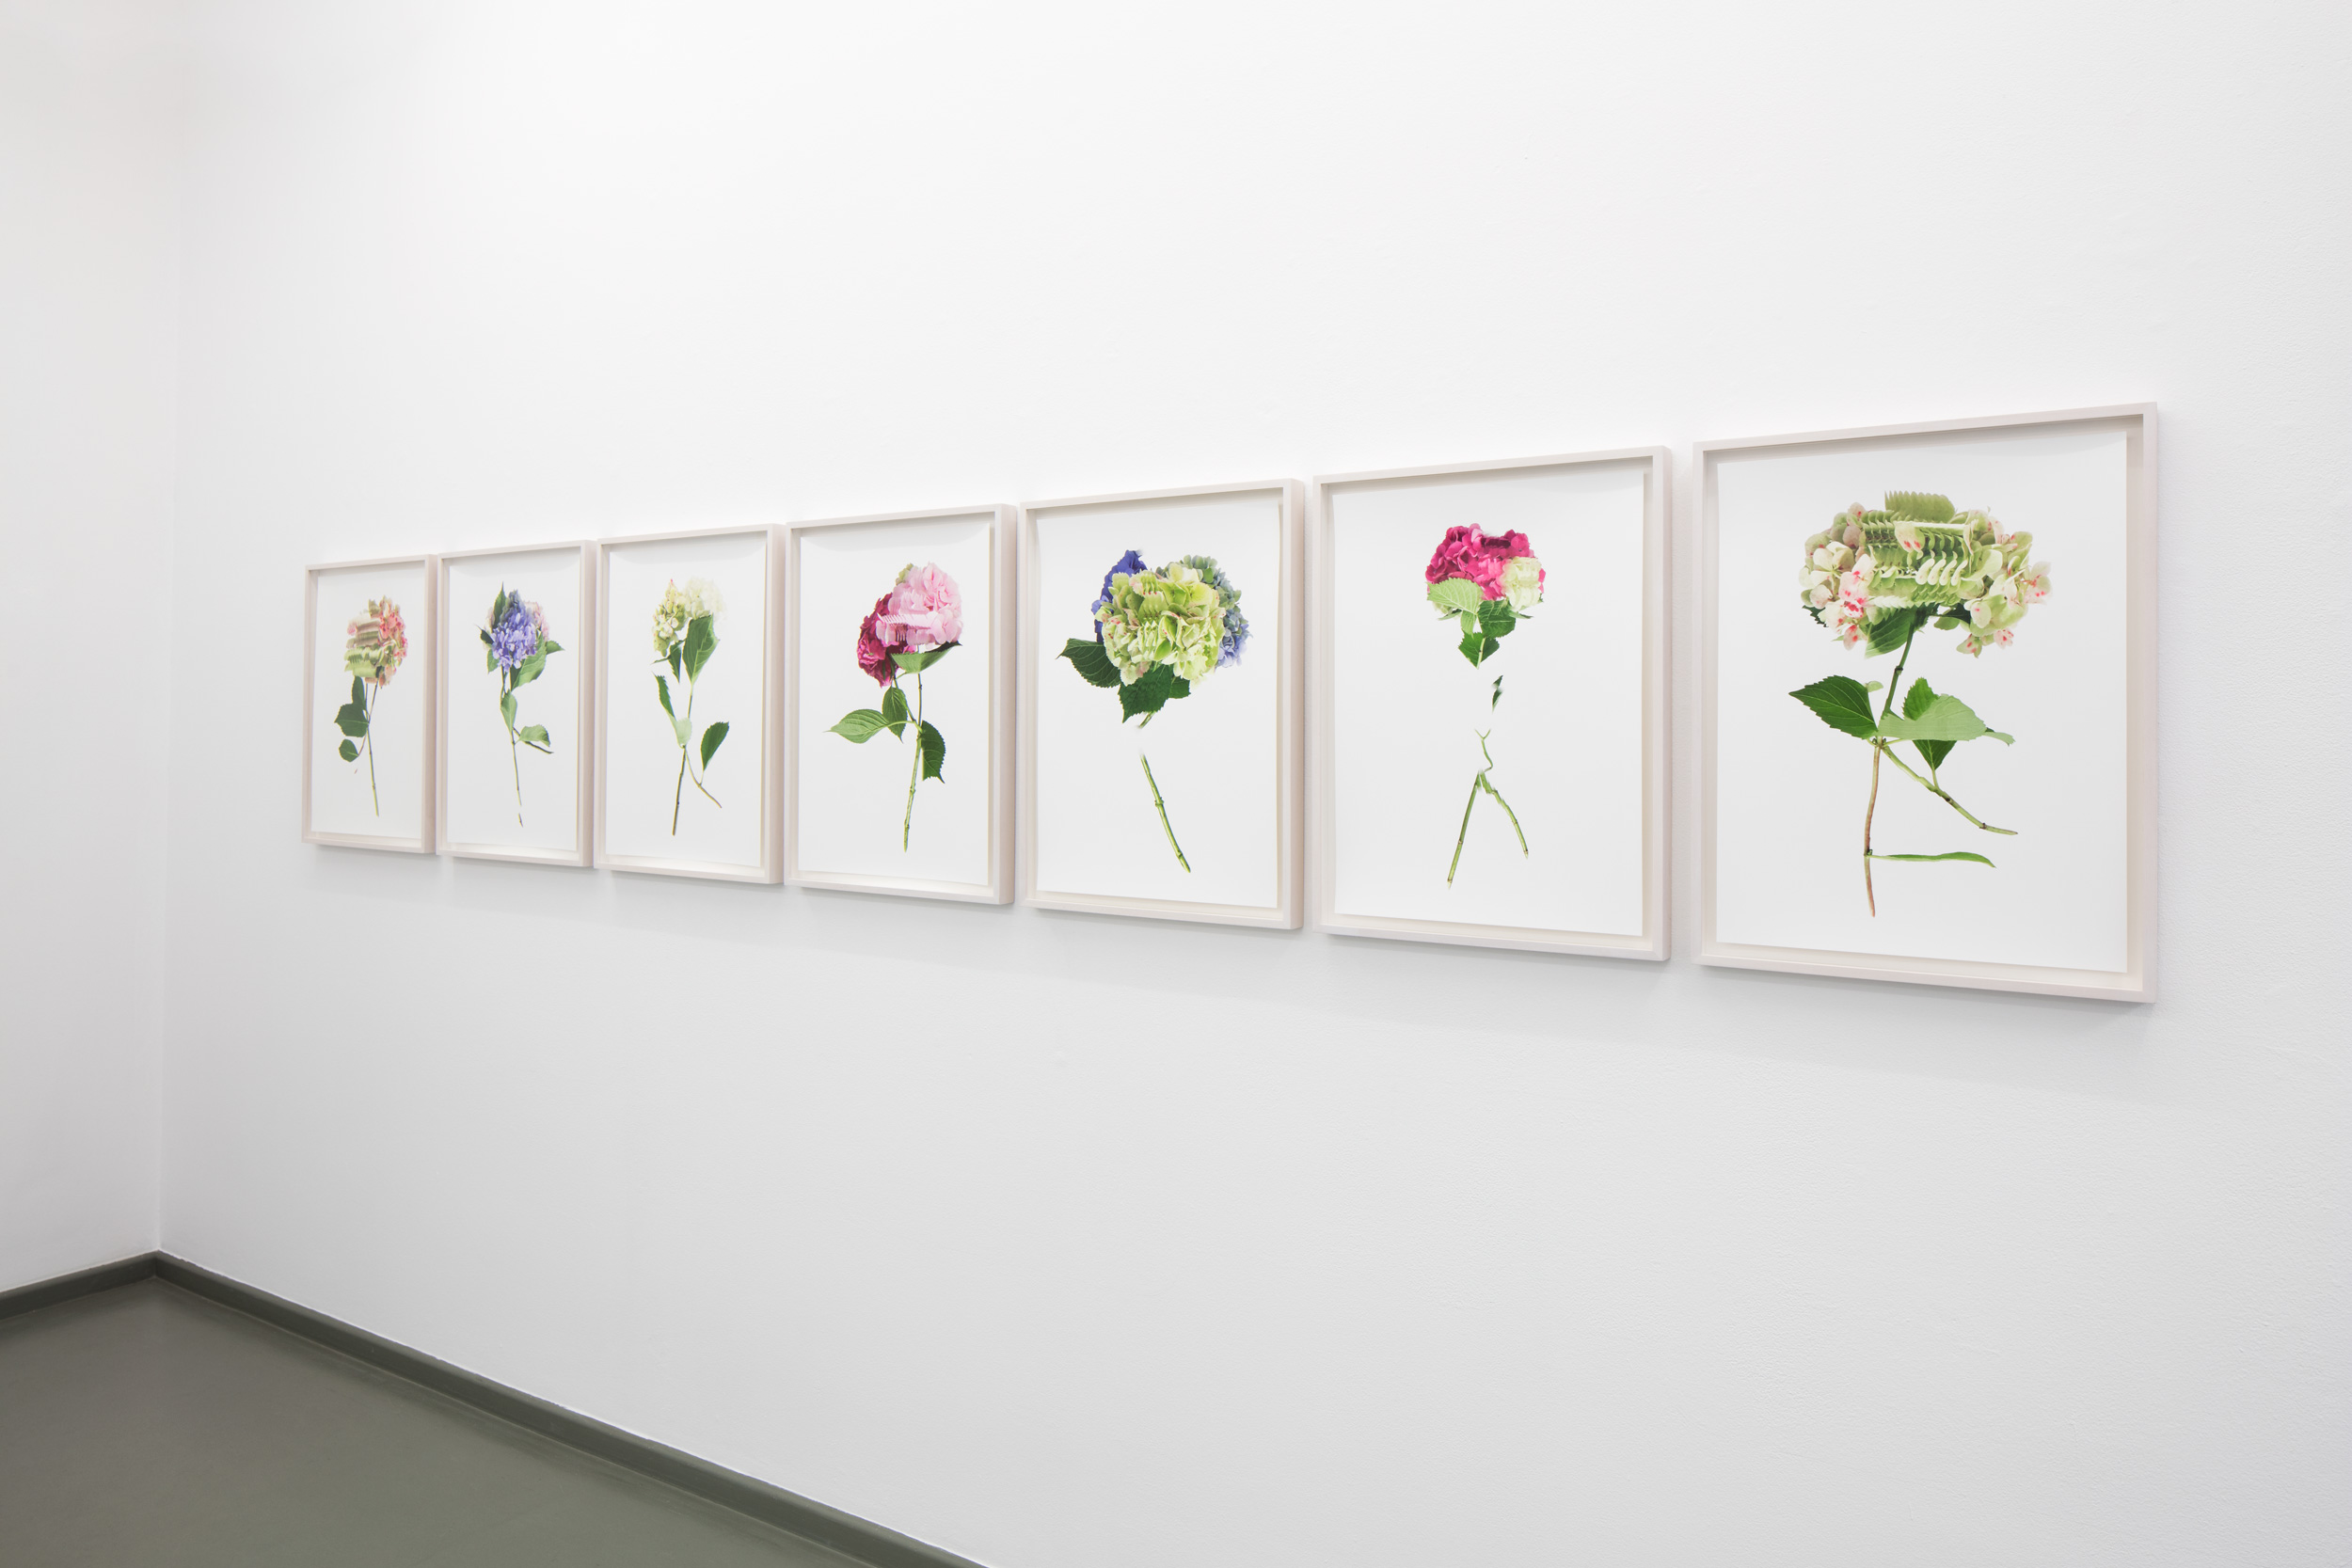  Ausstellungsansicht RANDOM FLOWERS, Rasche Ripken, 2018 